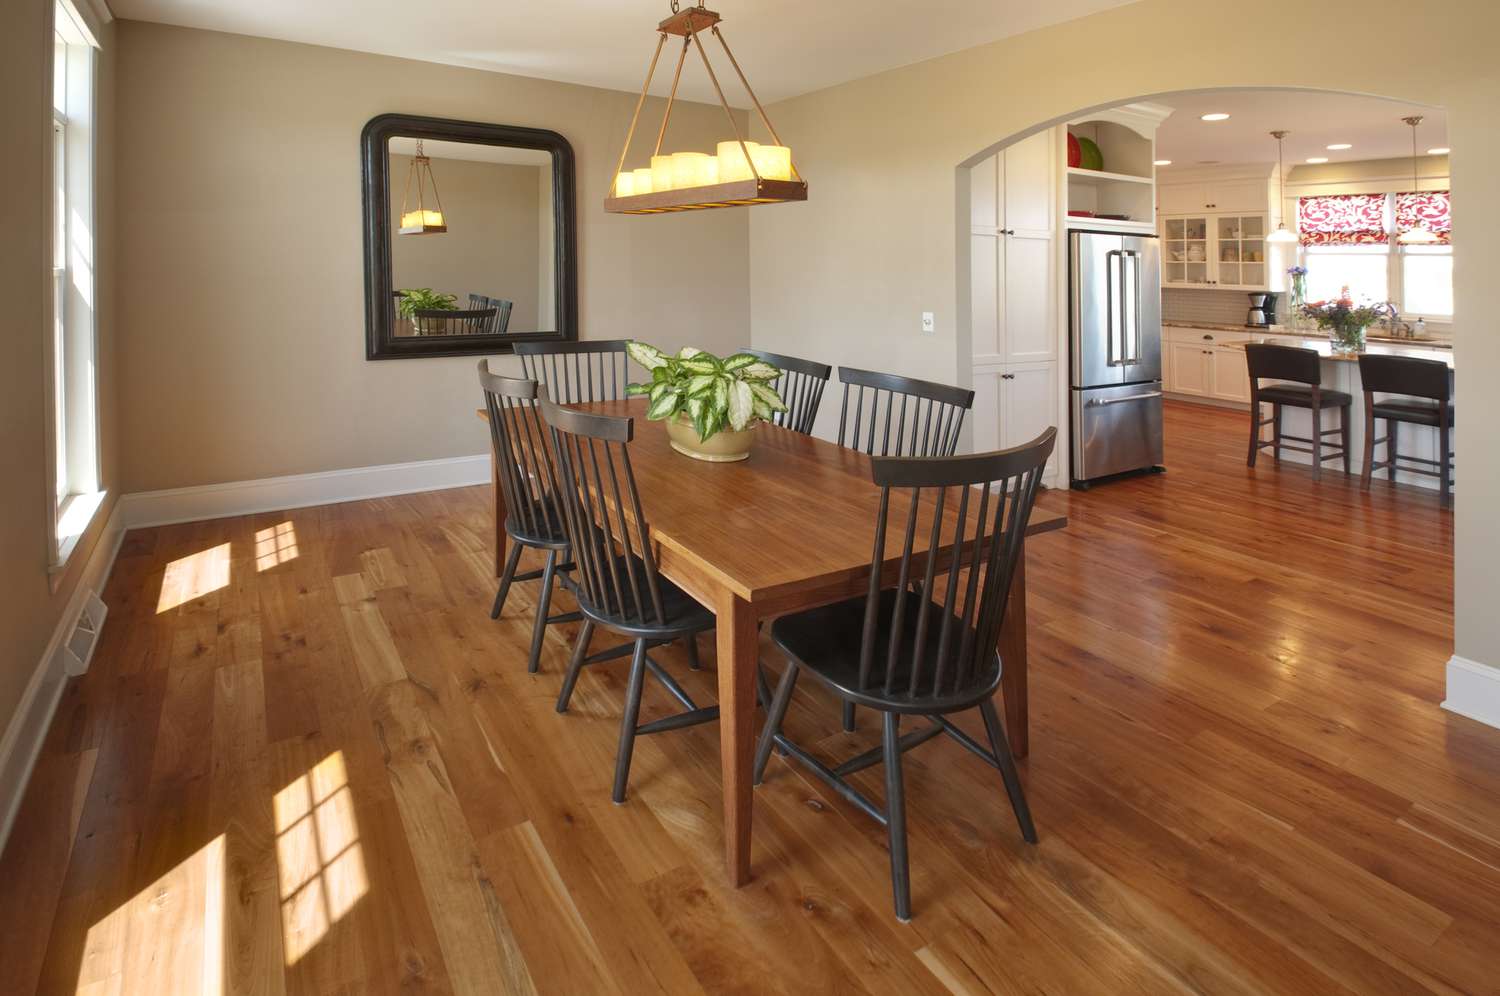 hardwood floor dining room